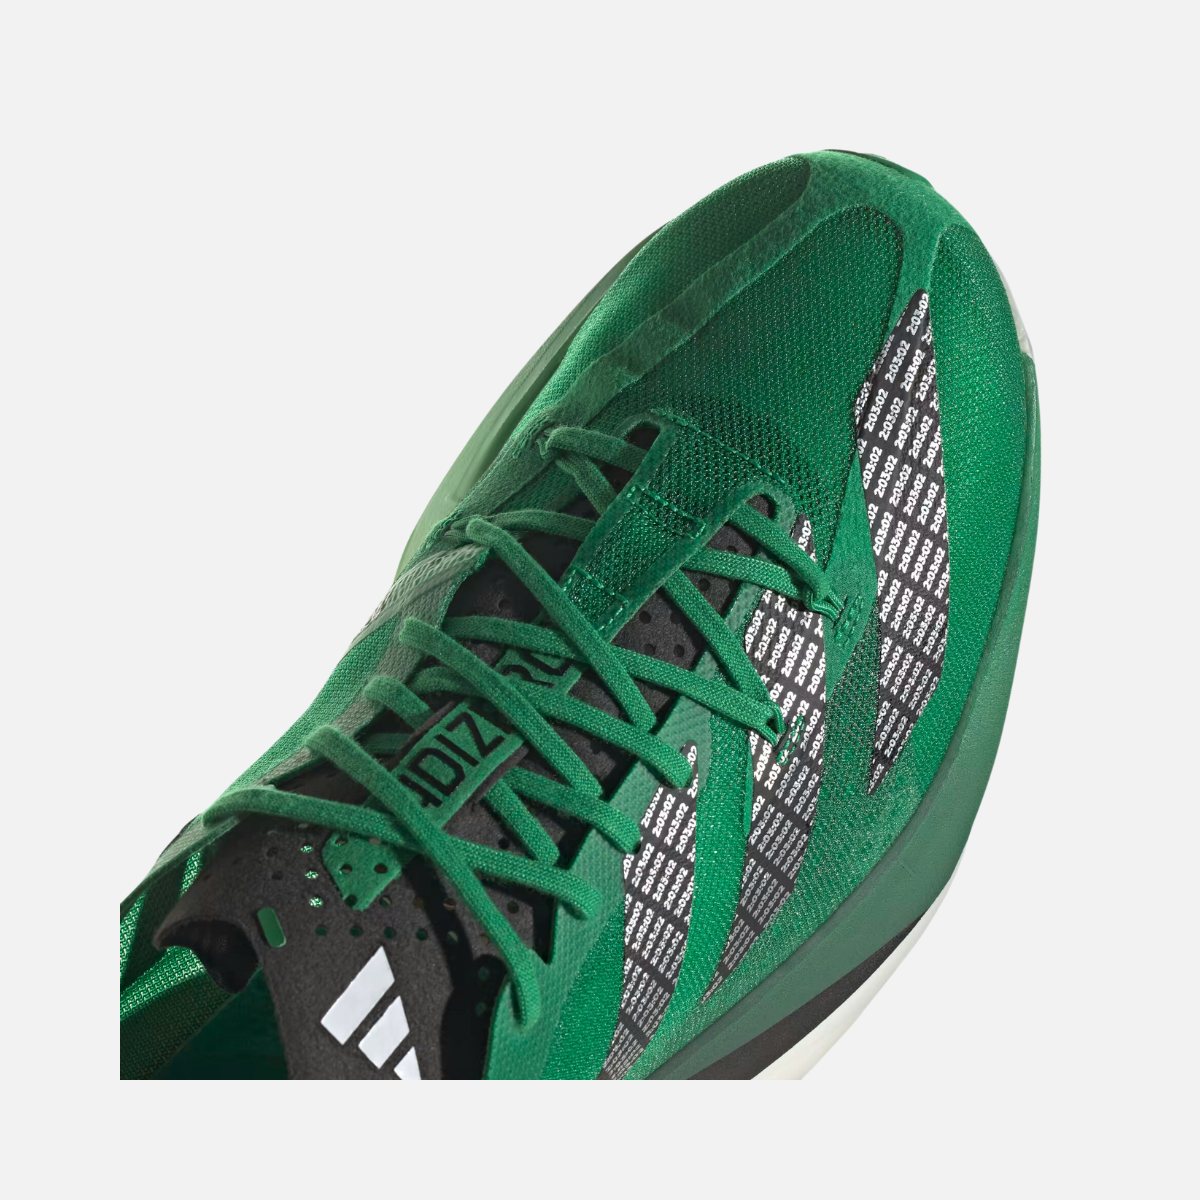 Adizero Adios Pro 3 Unisex Running Shoes -Green/Core Black/Night Metallic